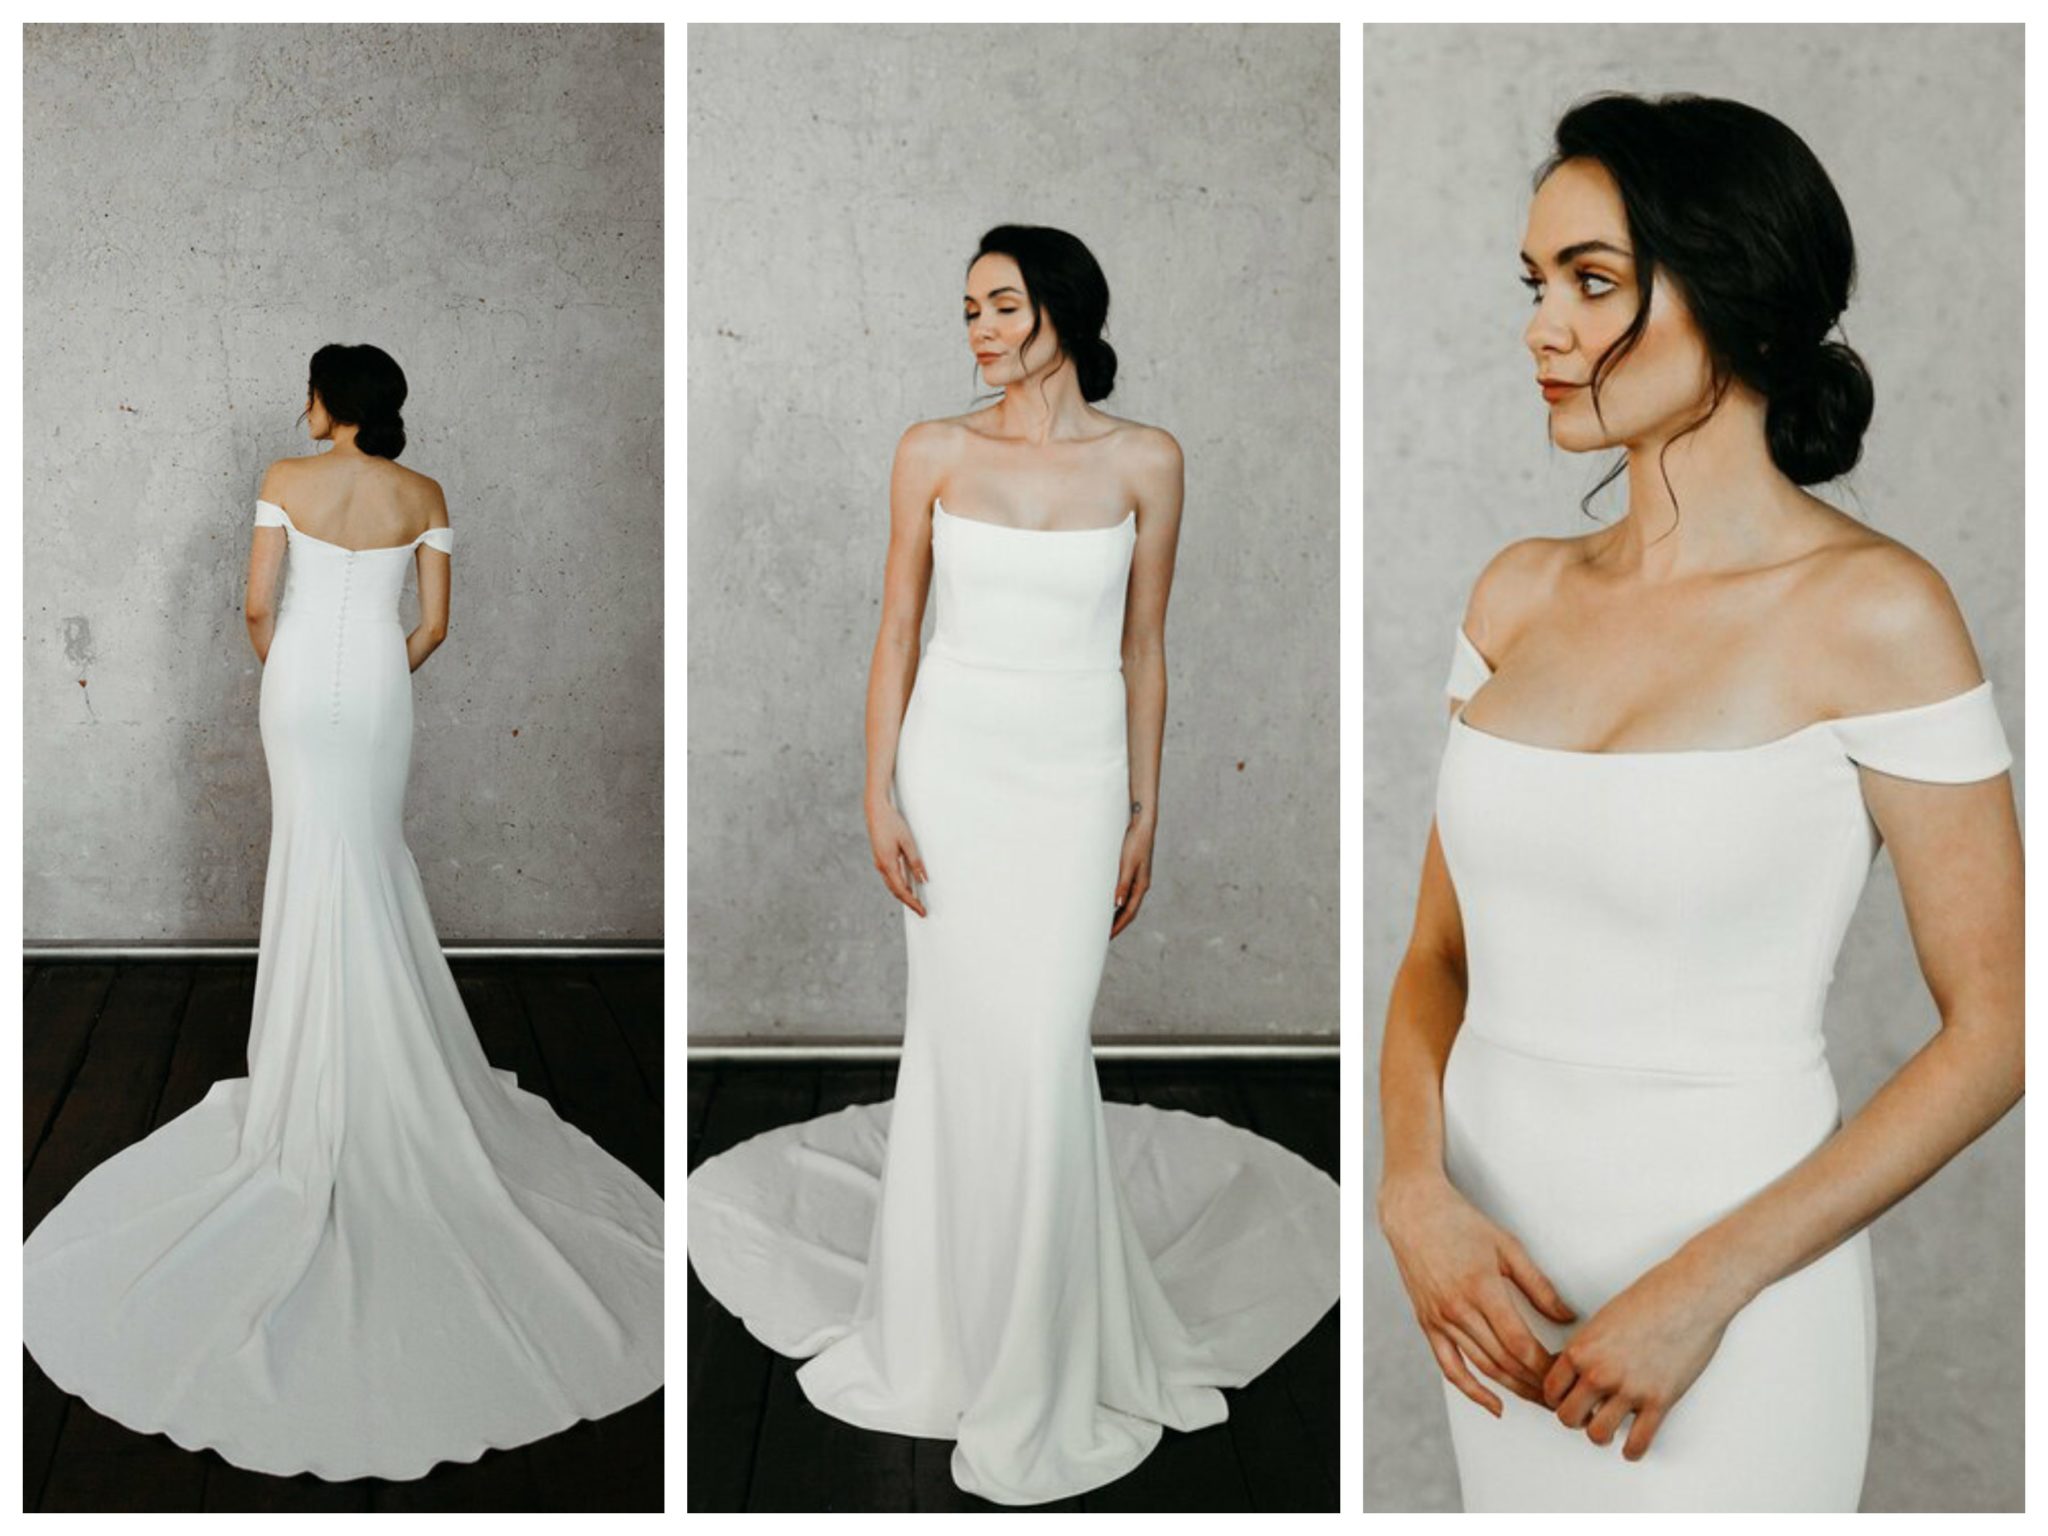 Wedding dresses for broad shoulders by top Los Angeles bridal shop, Love and Lace Bridal Salon: Alyssa Kristin's Camilla